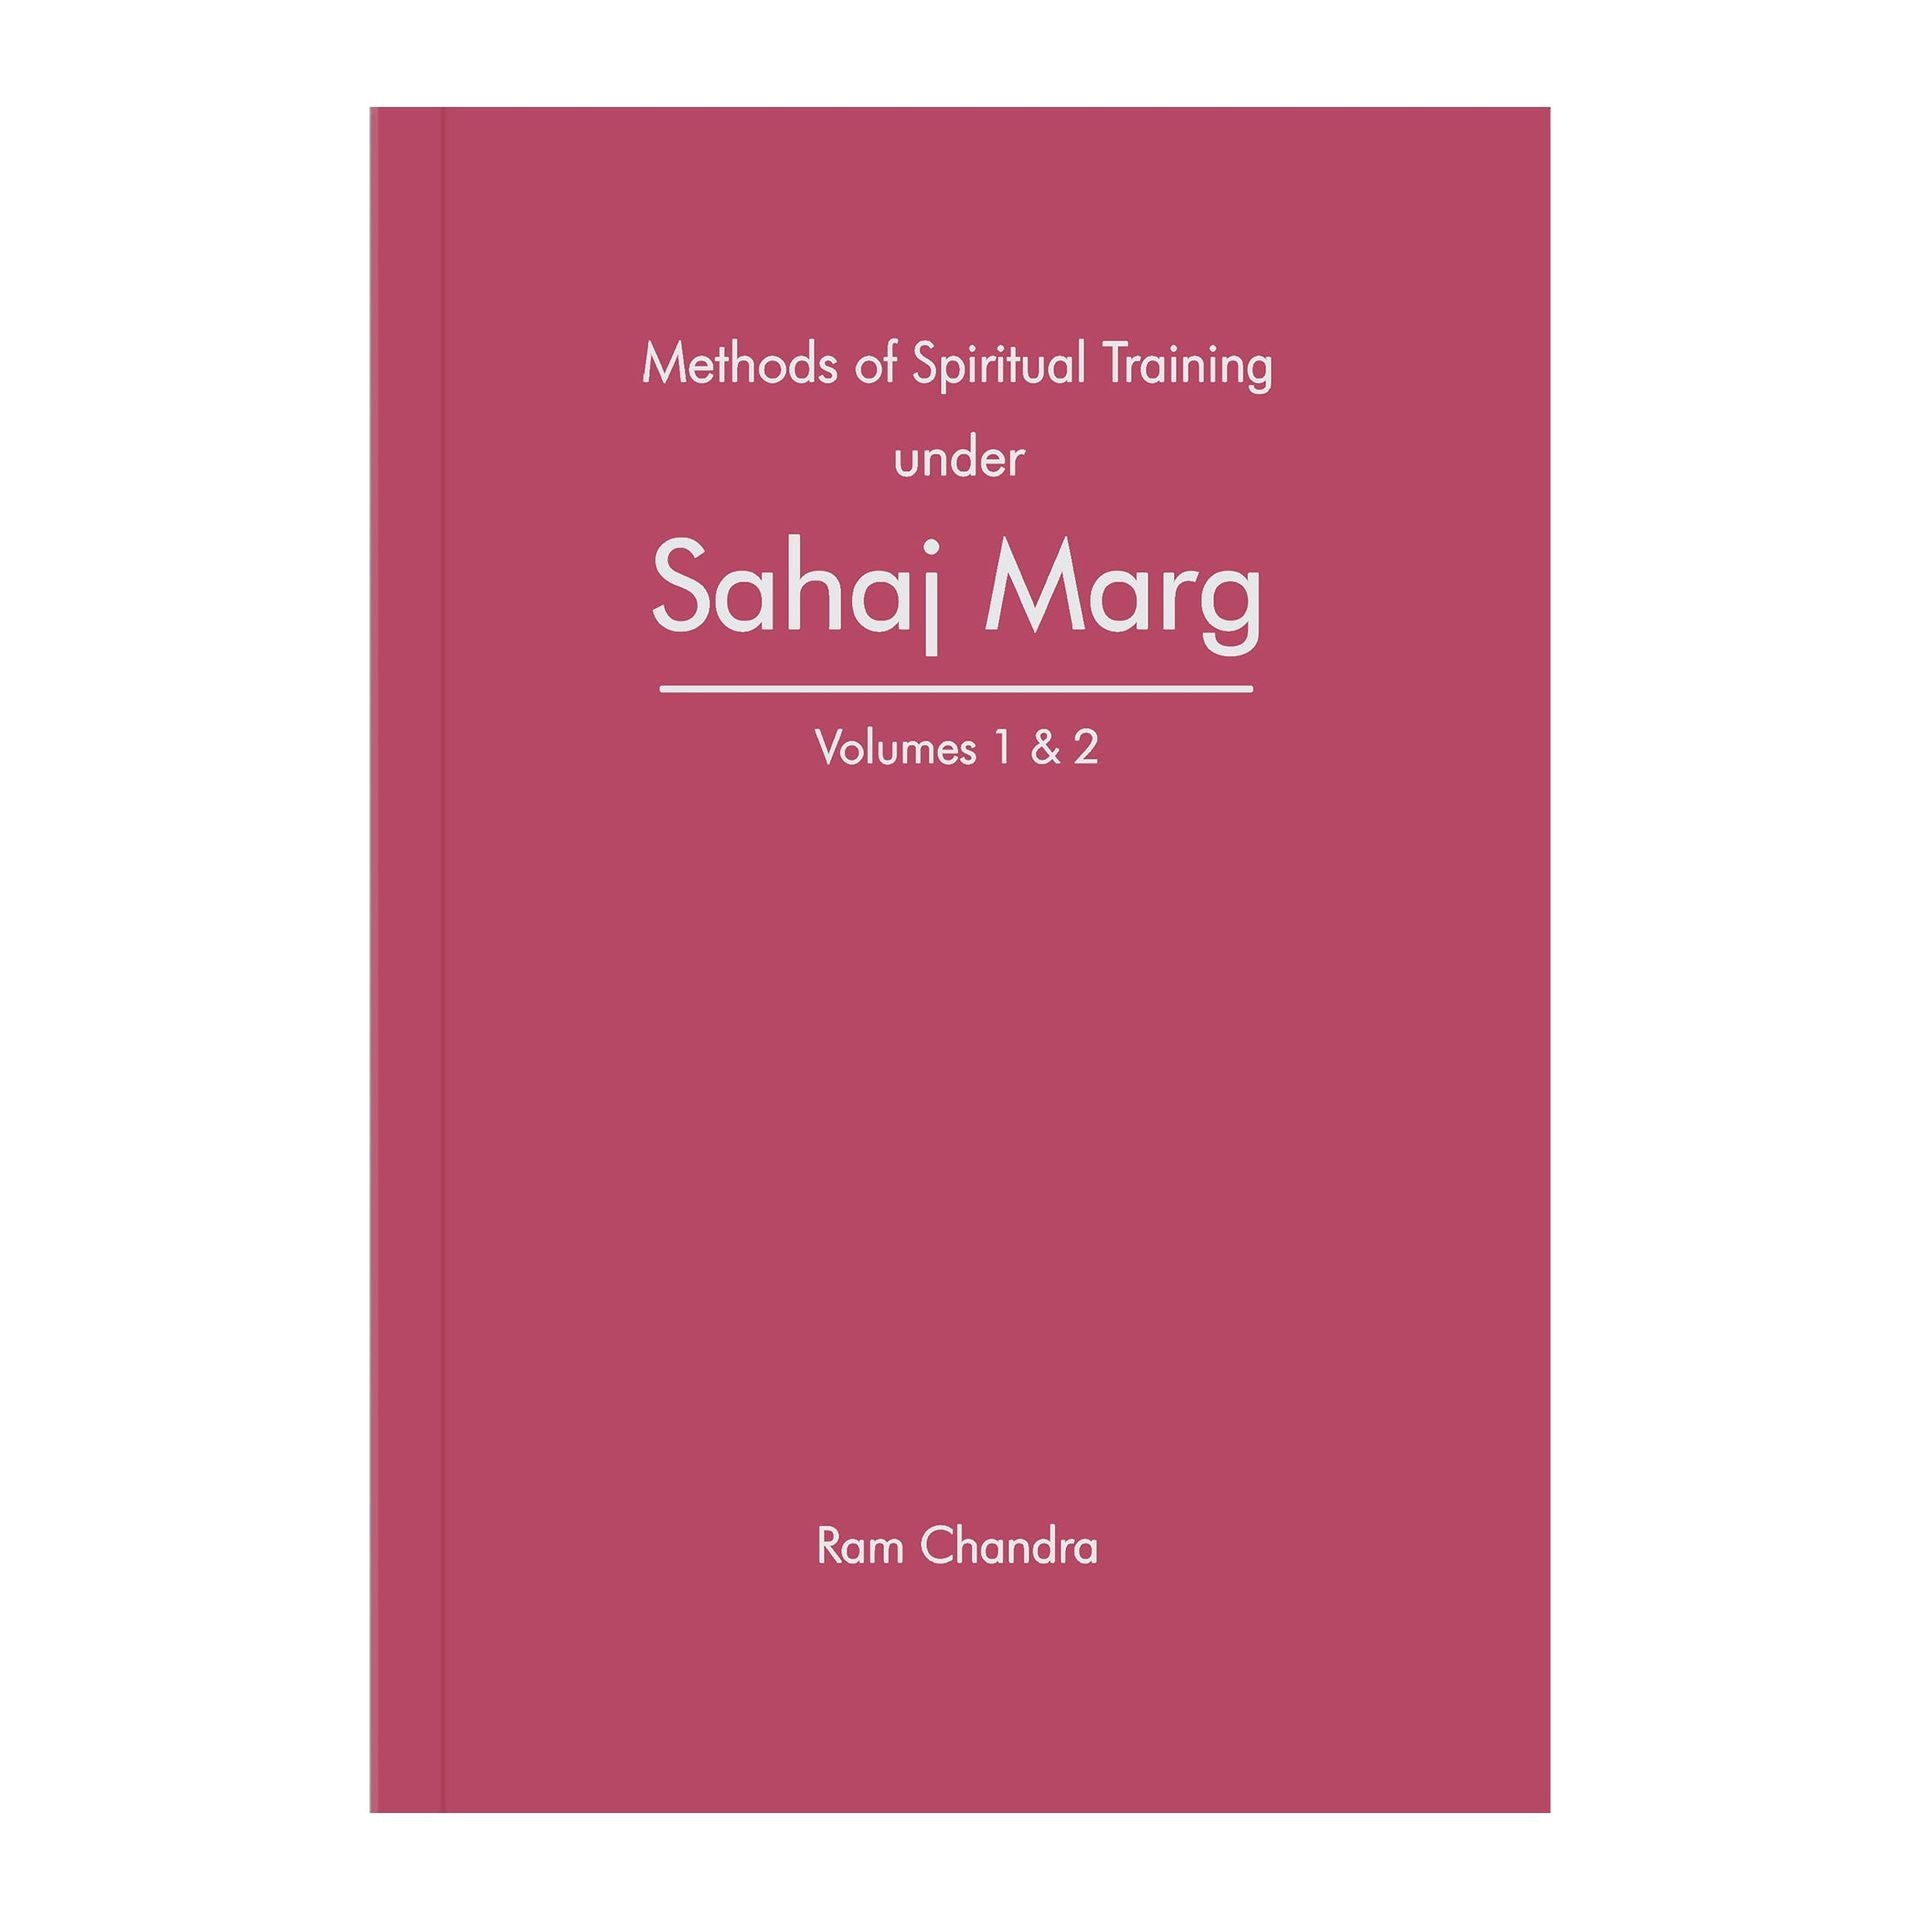 Method of Spiritual Training under Sahaj Marg